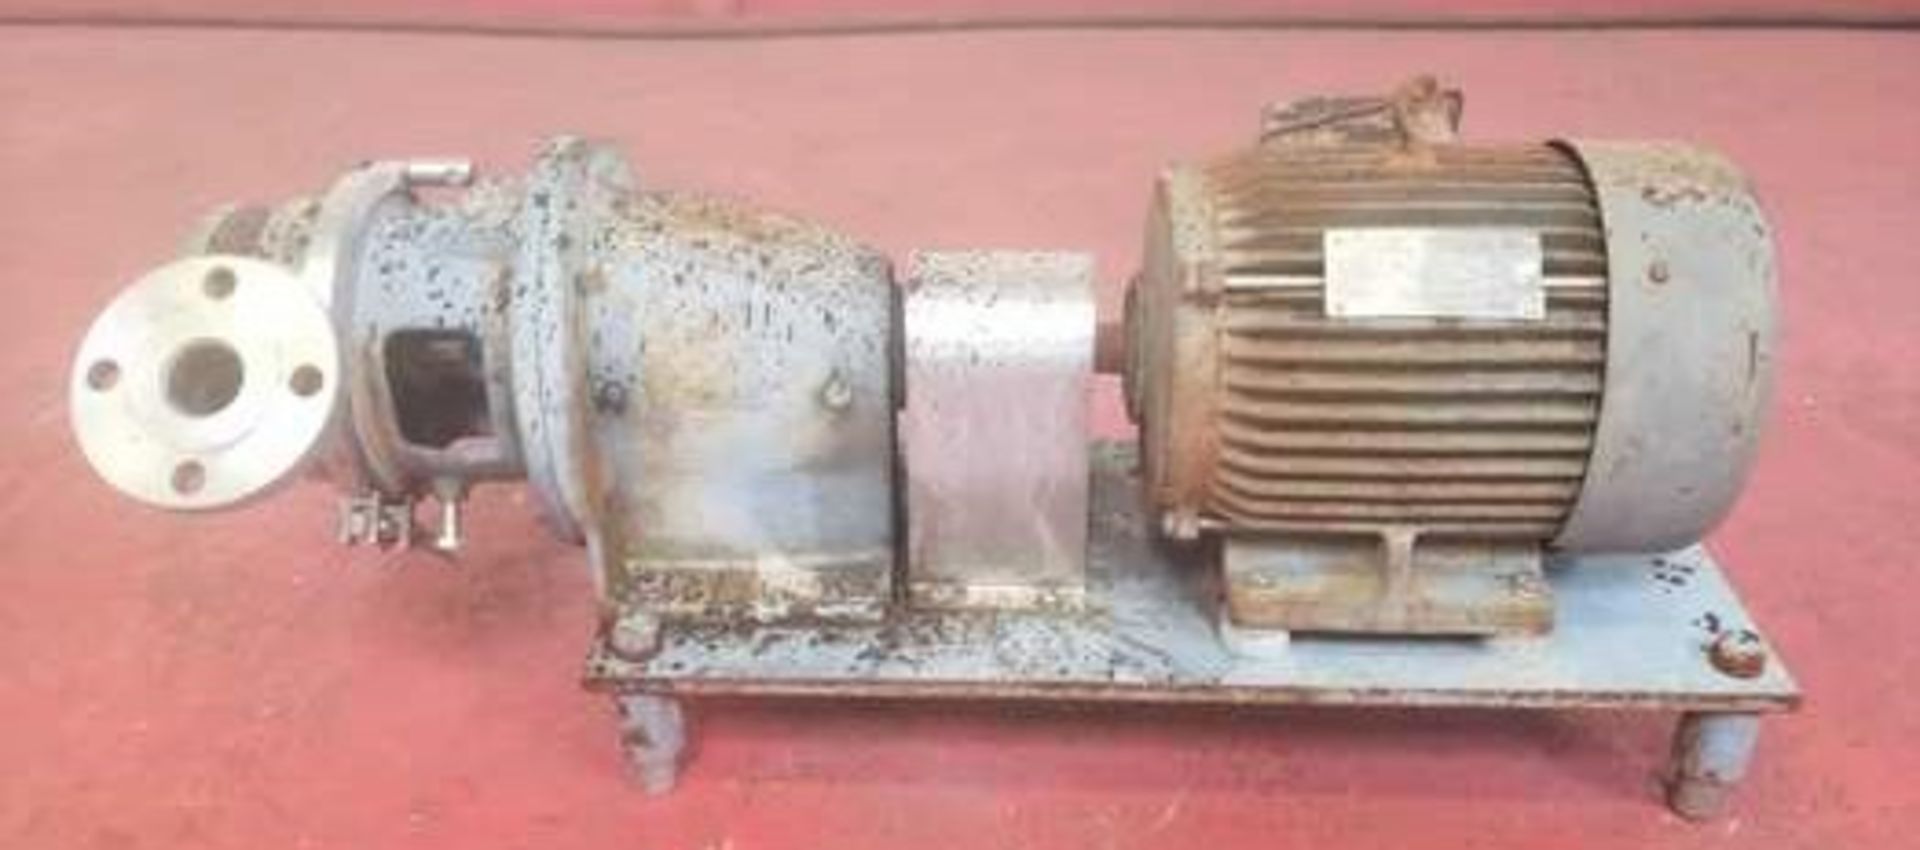 CREPACO High Pressure Centrifugal Pumps. CREPACO S/S Sanitary Pumps. Mdl: 6C. S/Ns: B0438 and B0439. - Image 6 of 8